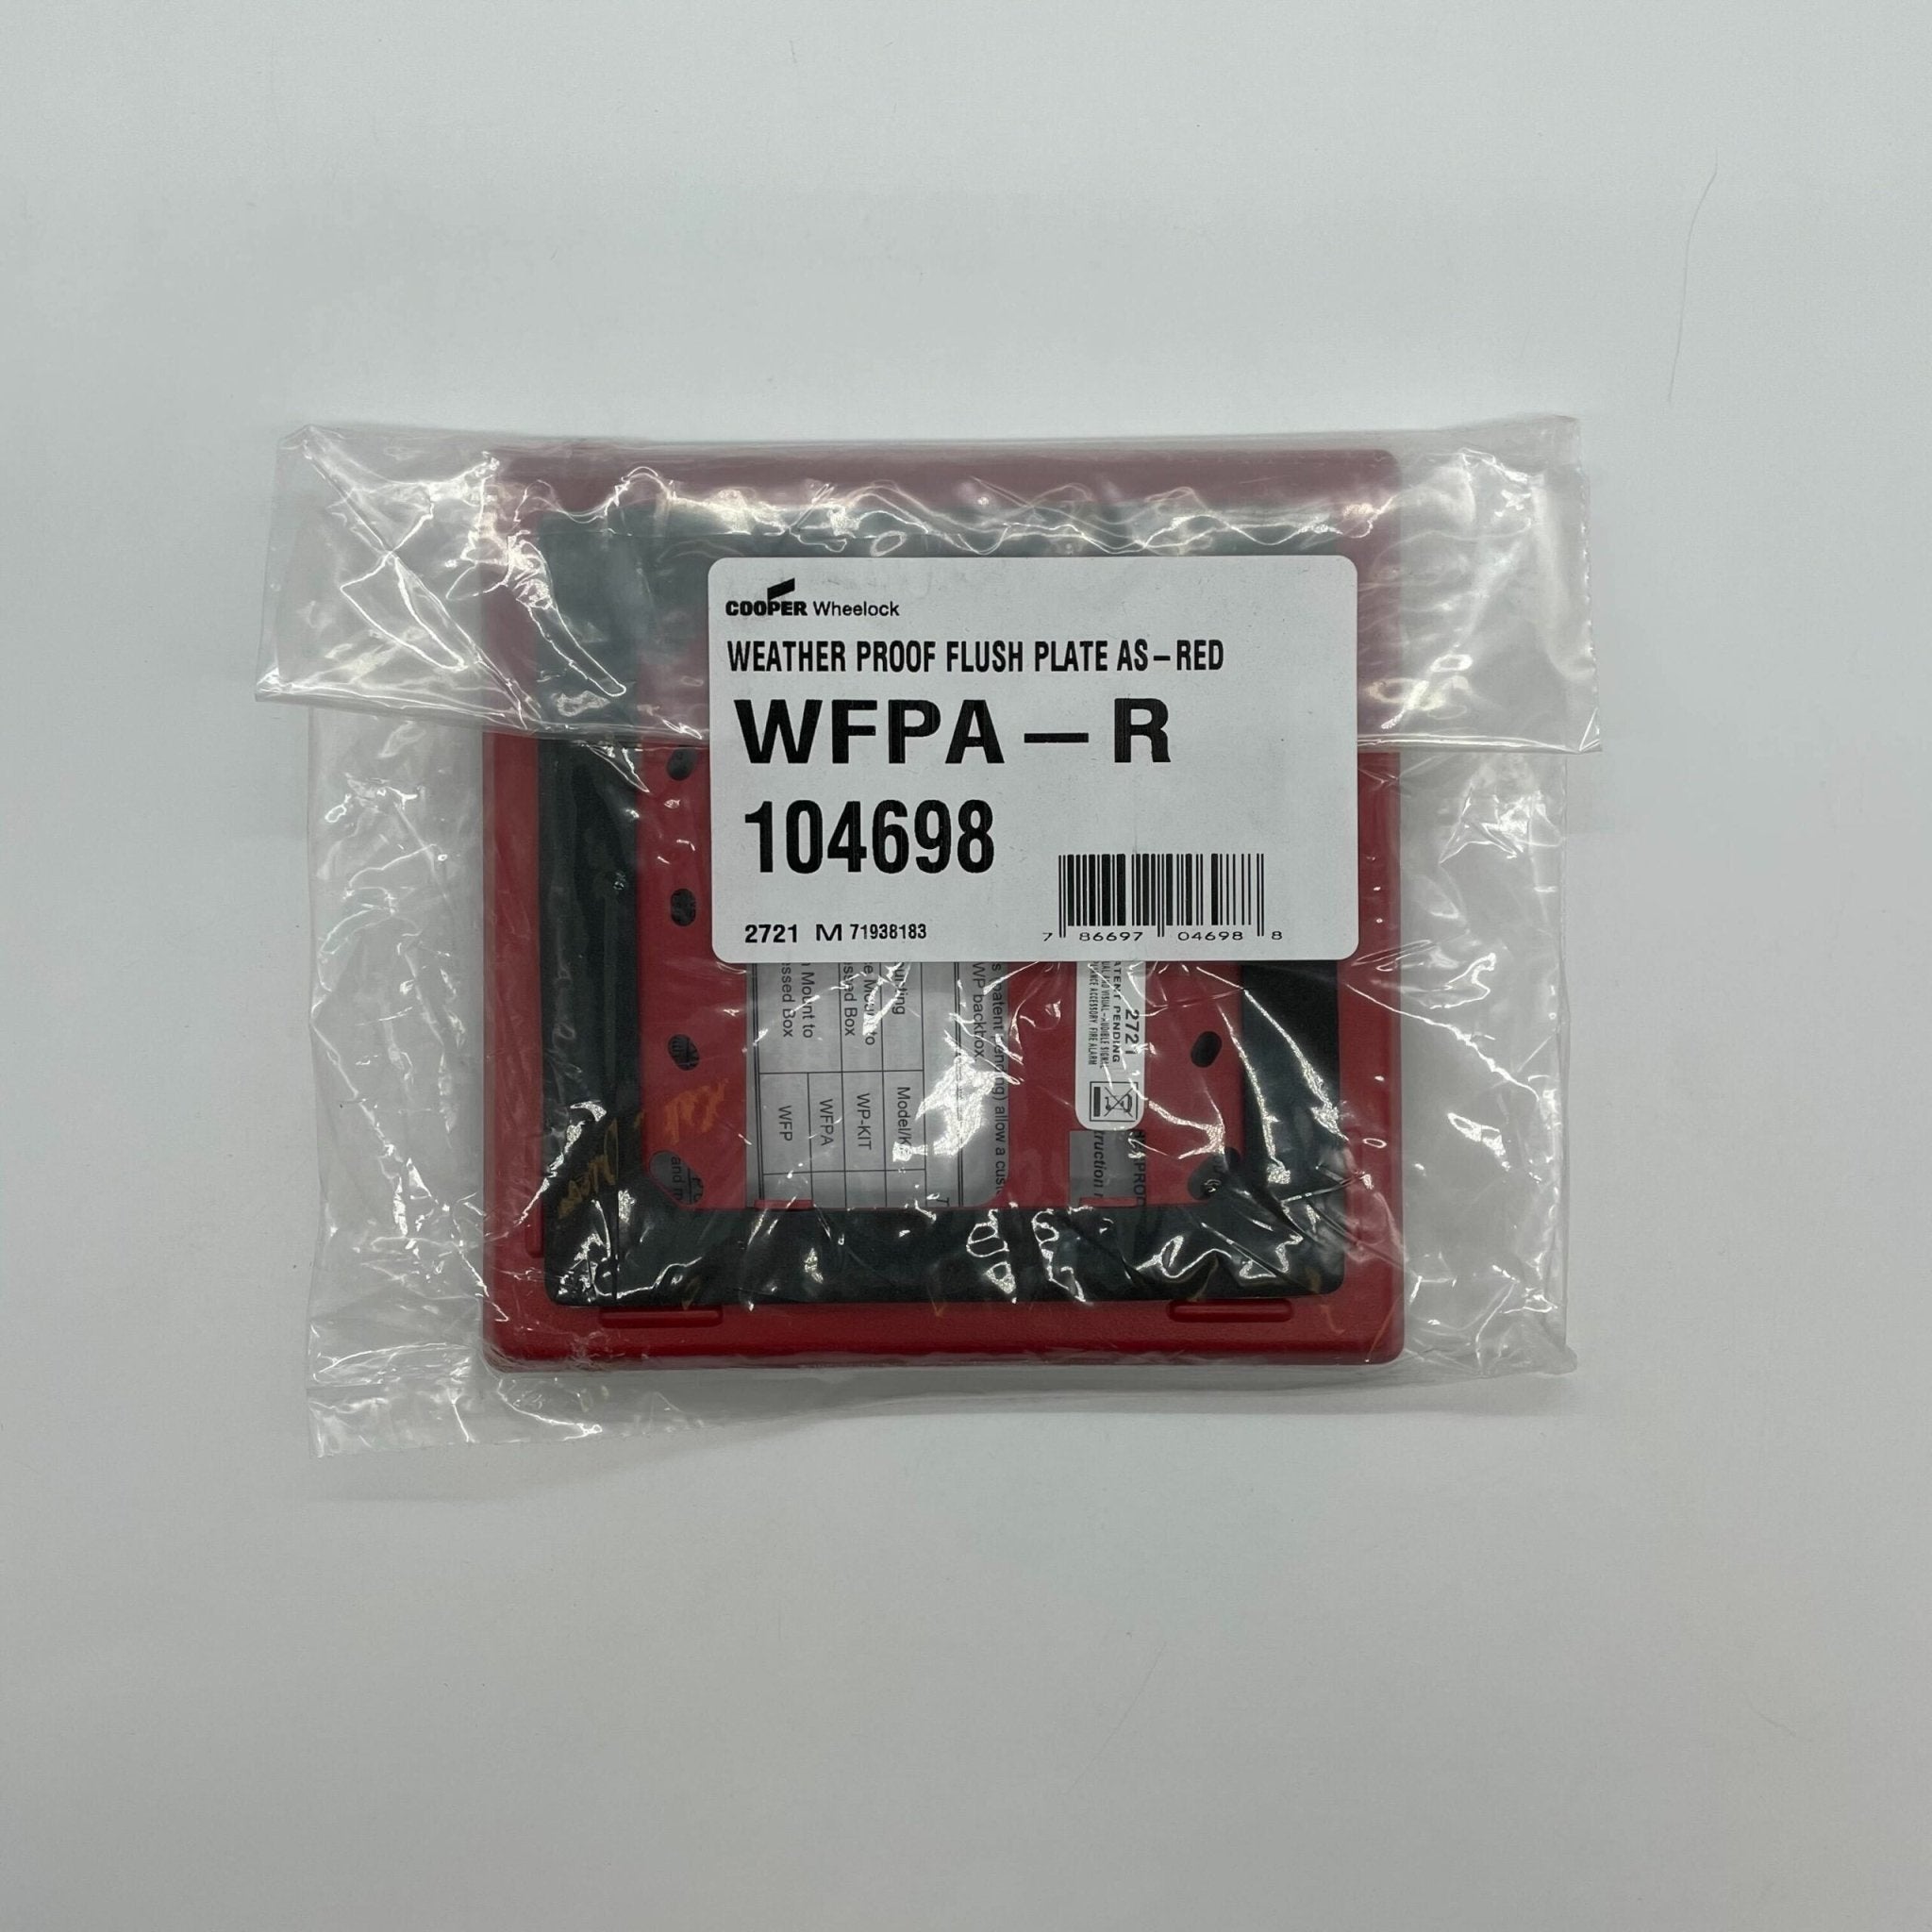 Wheelock WFPA-R - The Fire Alarm Supplier